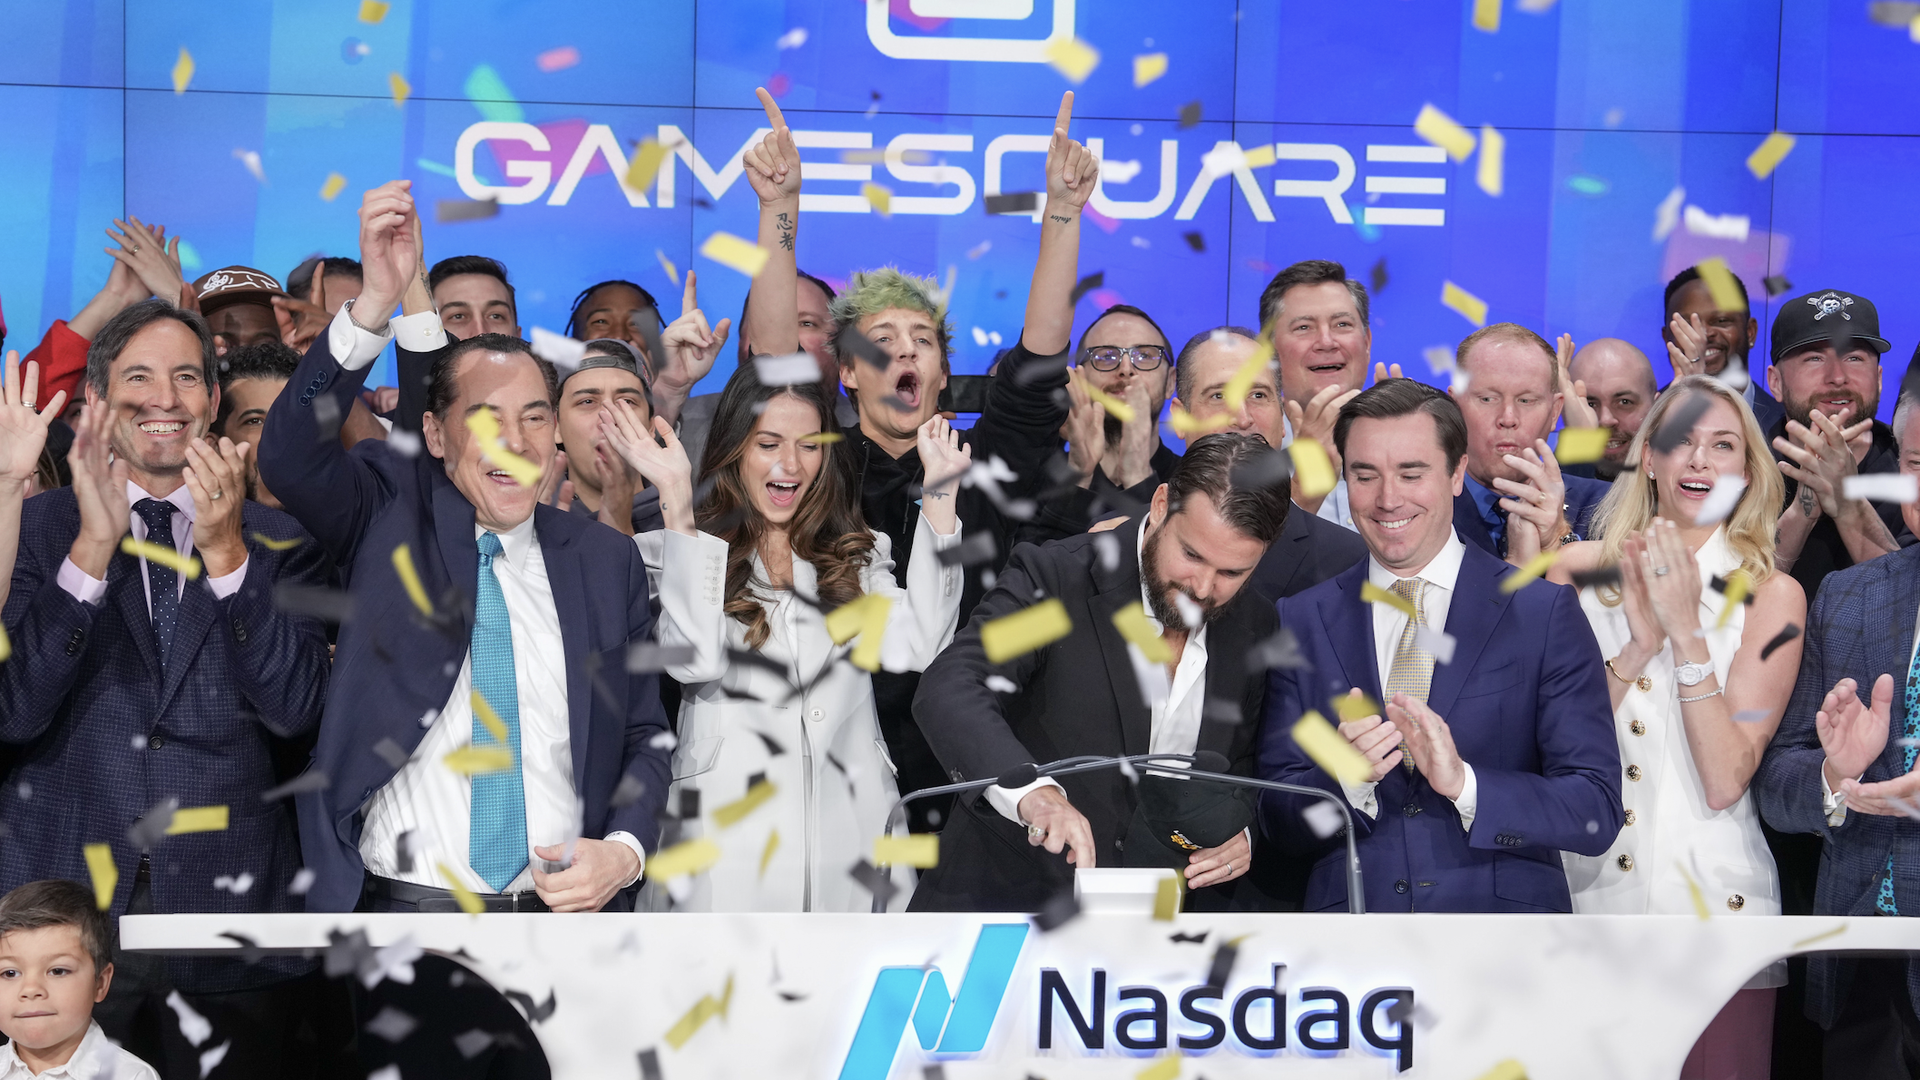 GameSquare executives ringing the bell at the Nasdaq, yellow confetti falling